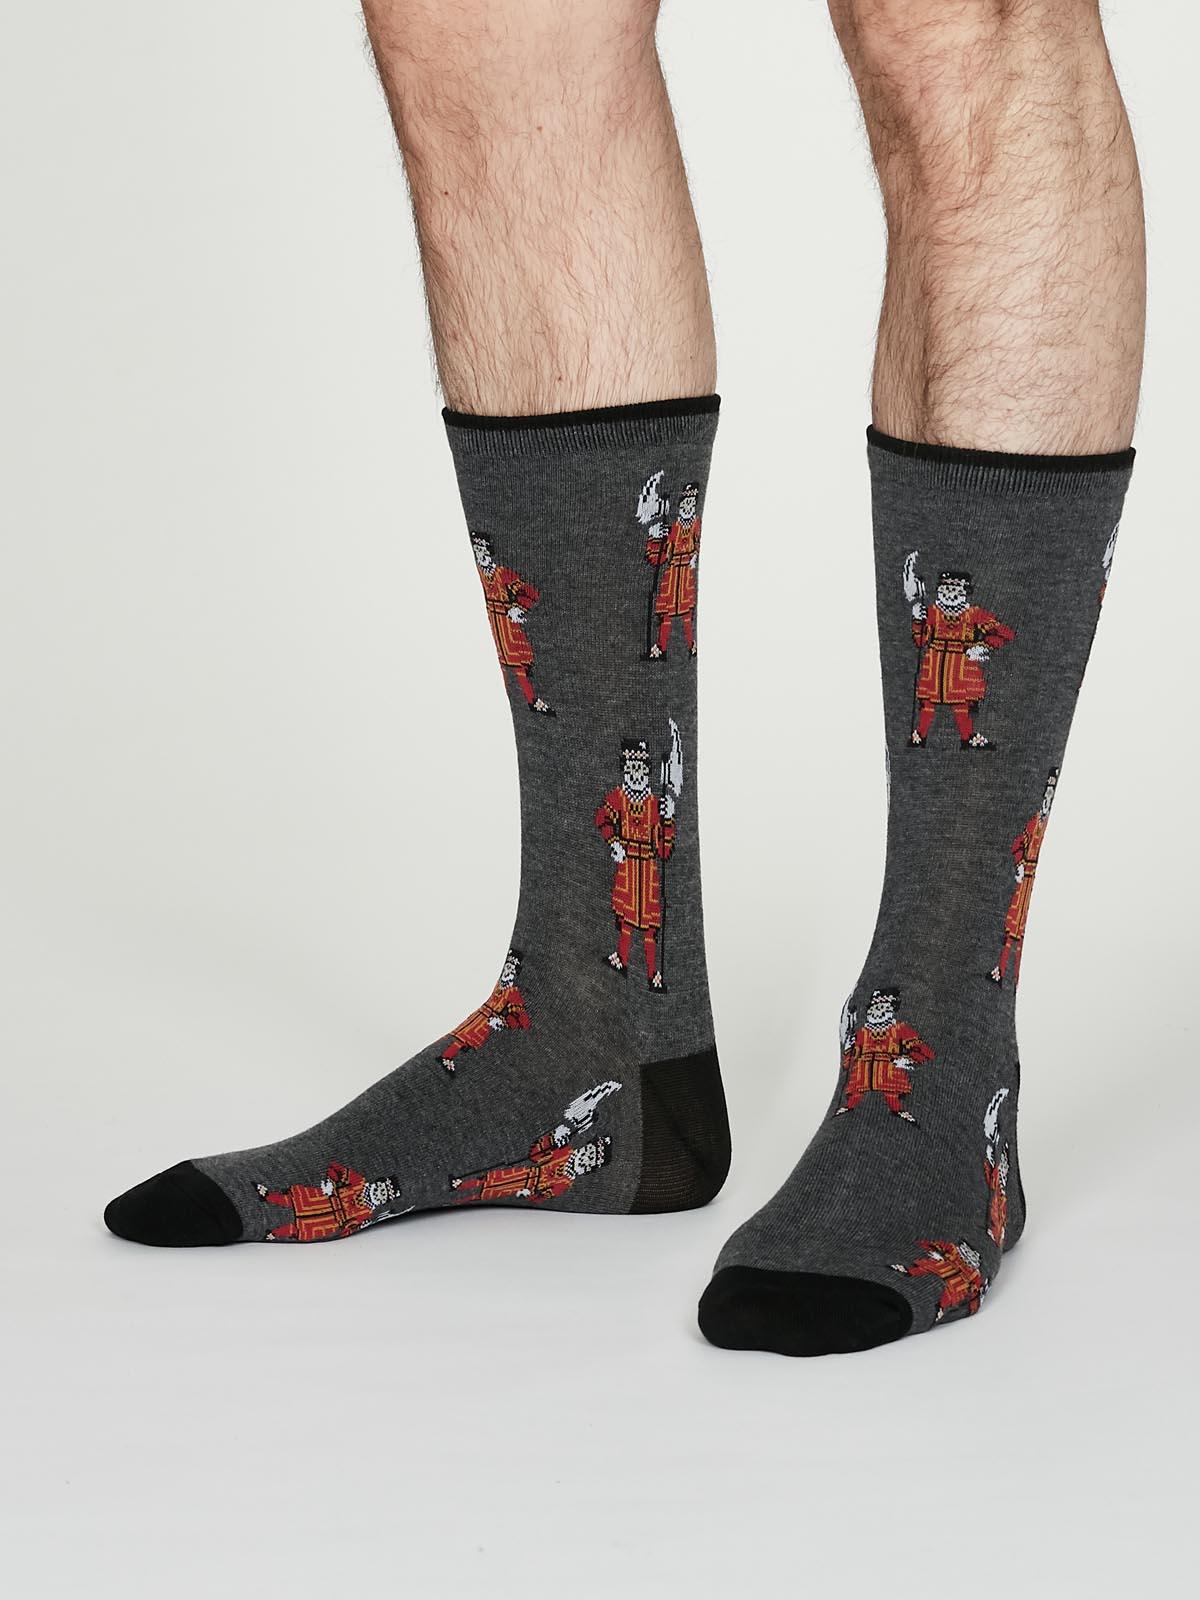 London Socks - Beefeater - Thought Clothing UK